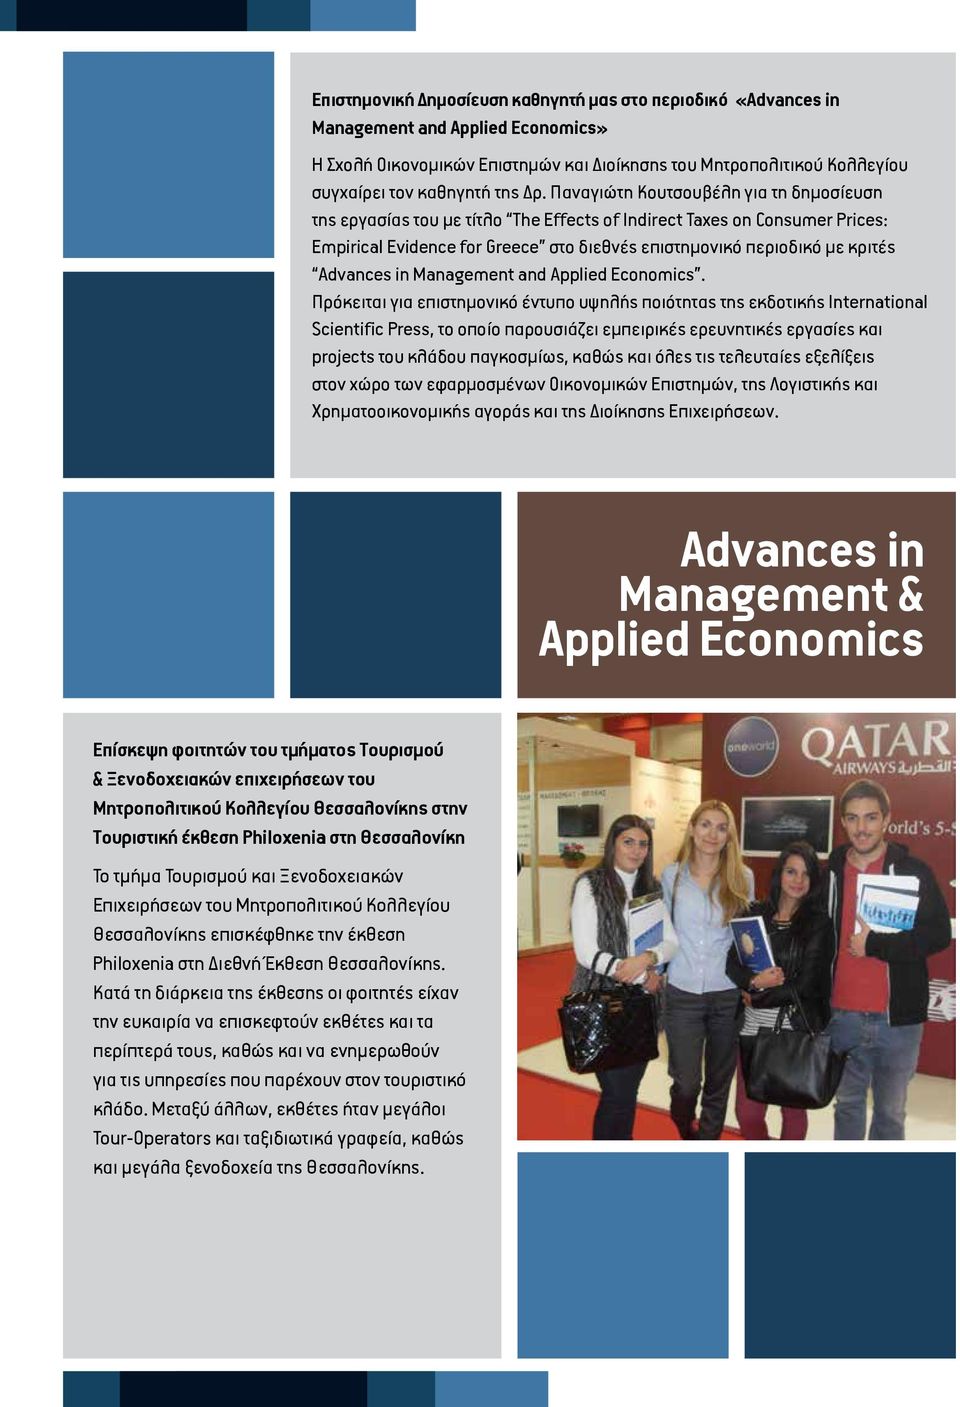 Advances in Management and Applied Economics.